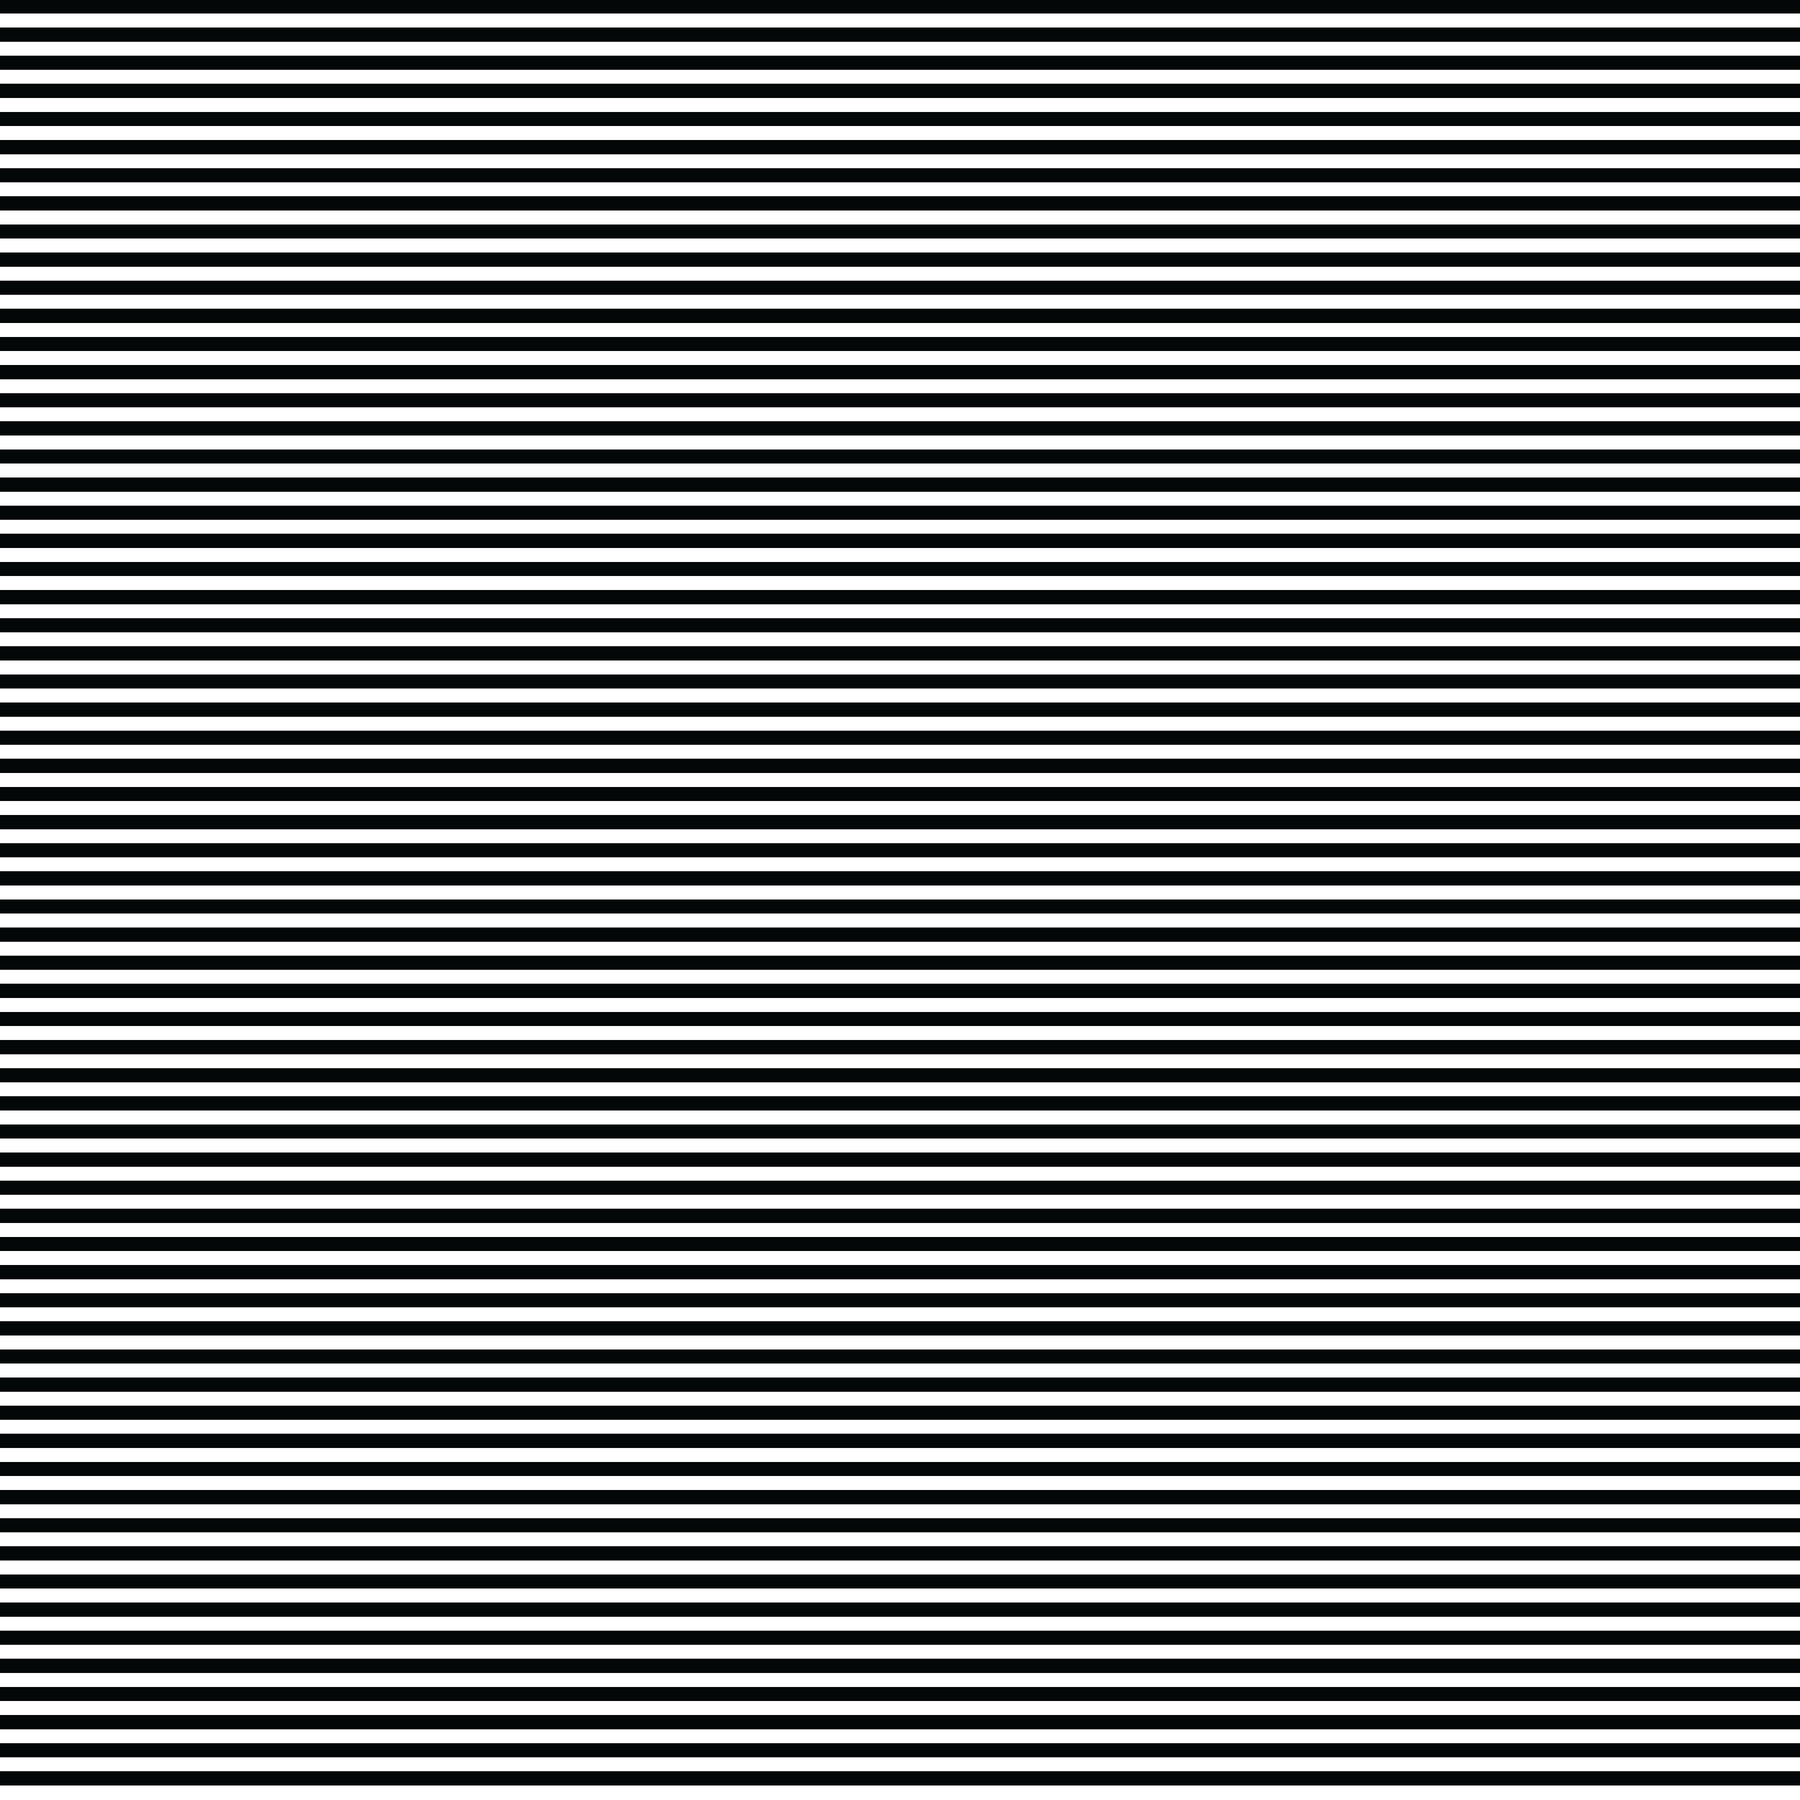 12 Seamless Stripe Patterns for Photoshop - Creative VIP